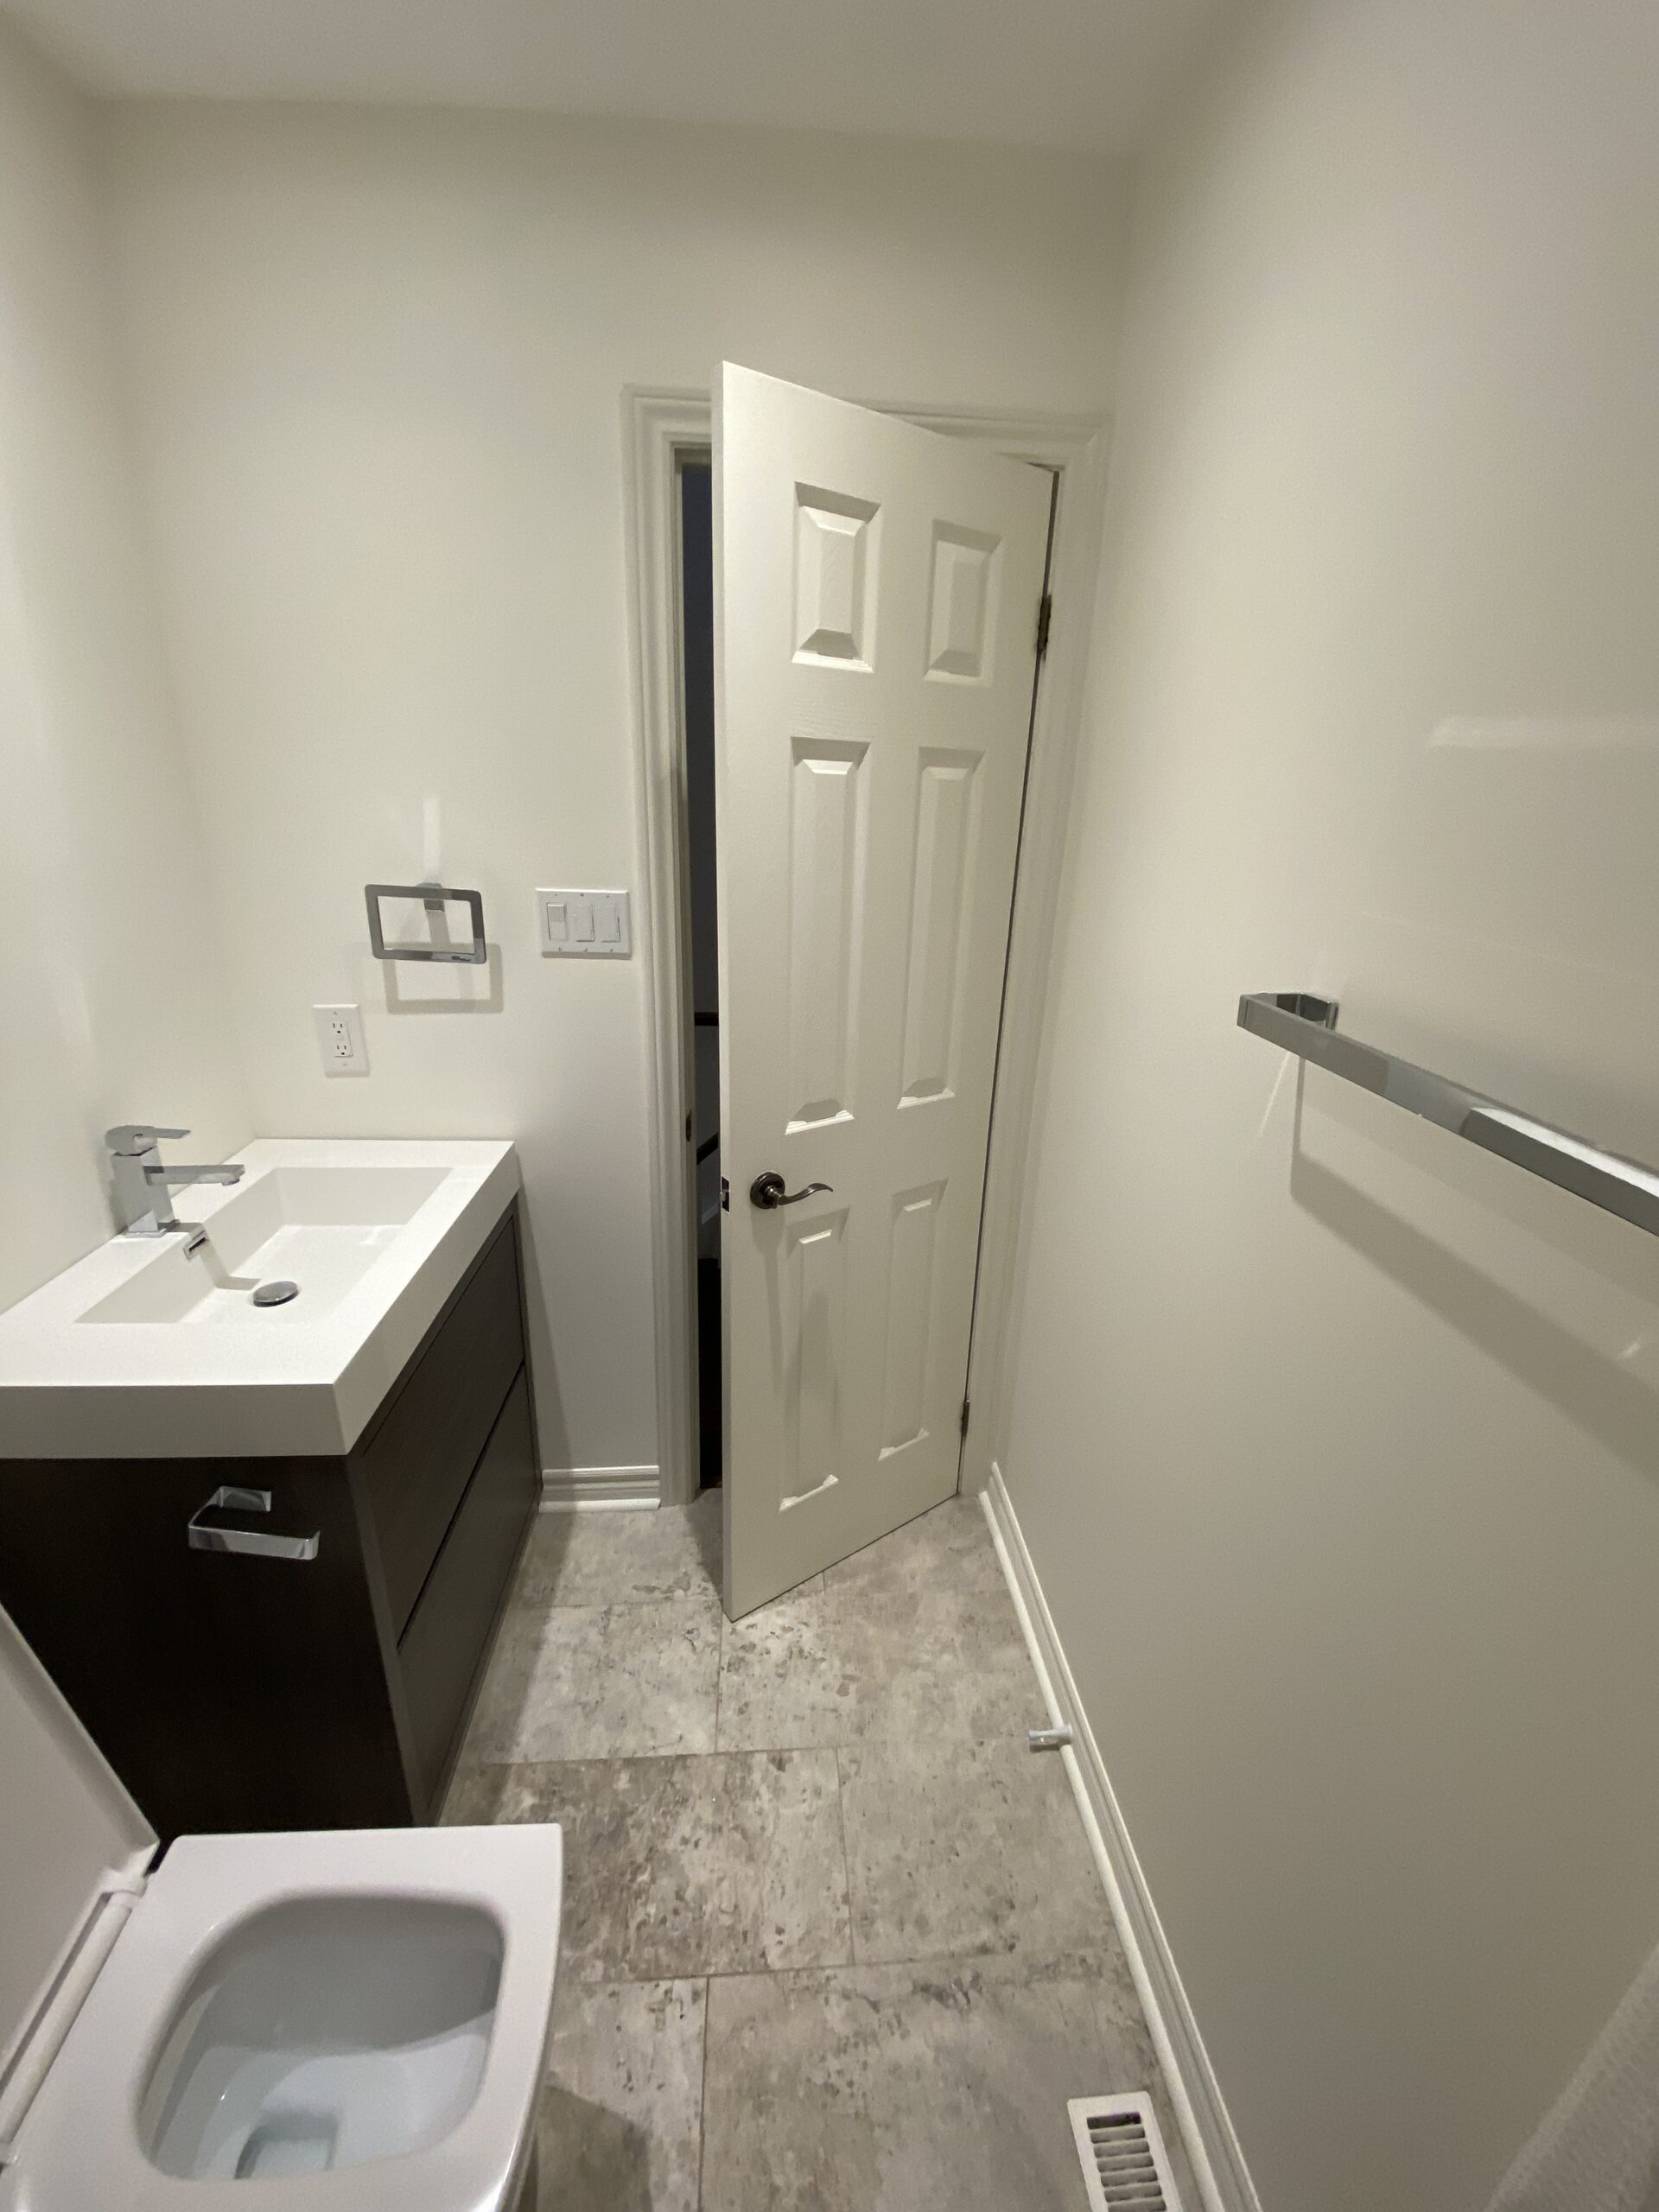 Bathroom-Reno-2-scaled.jpg